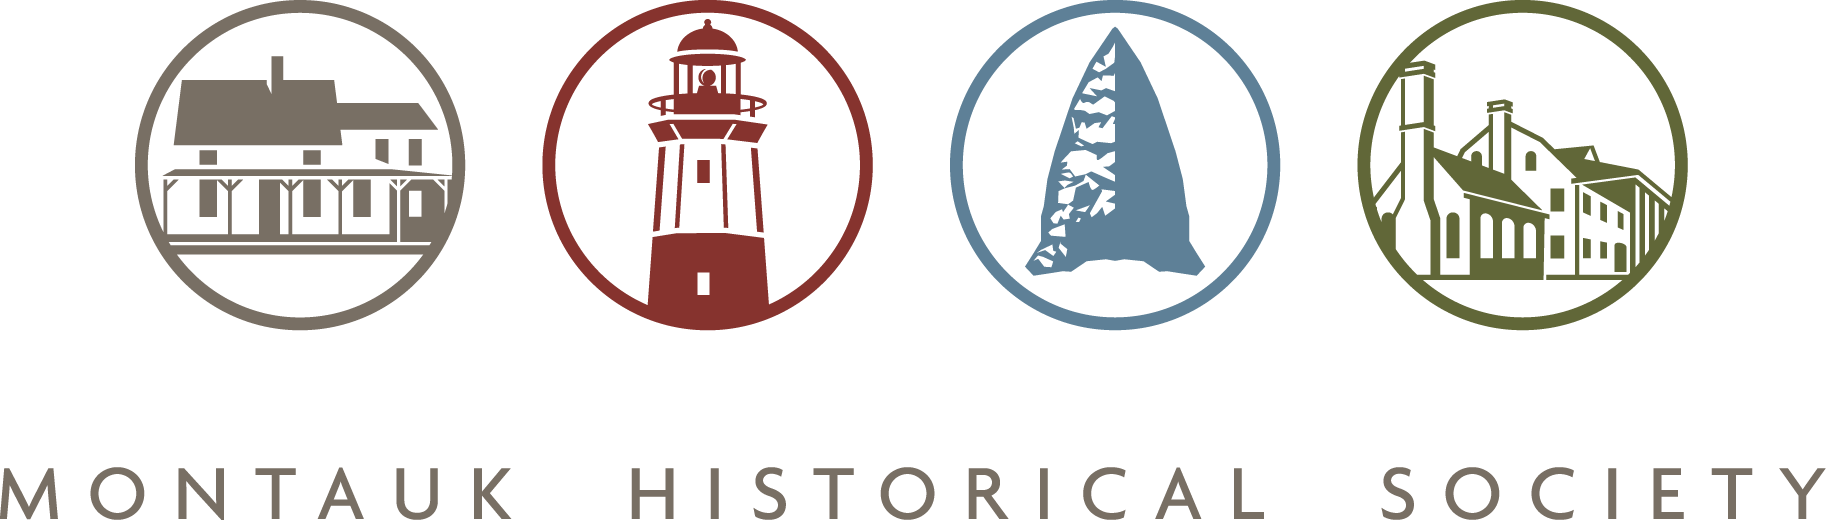 Montauk Historical Society